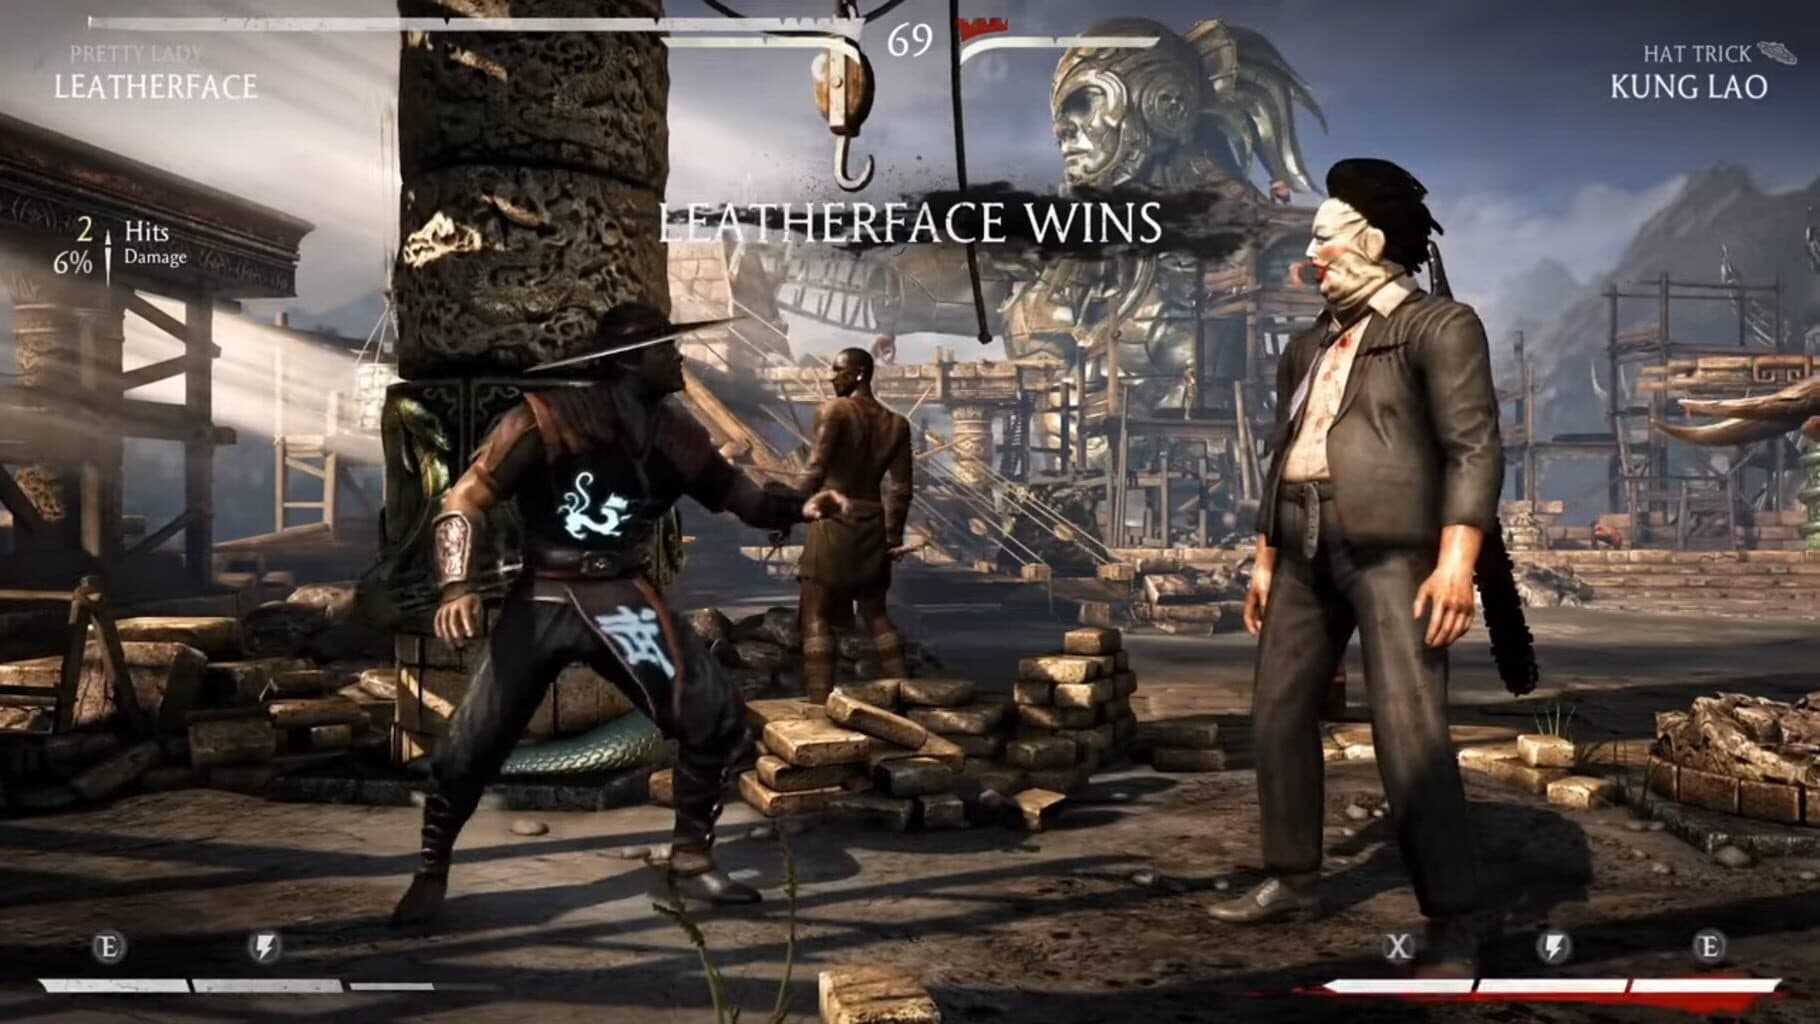 Mortal Kombat X: Leatherface Image